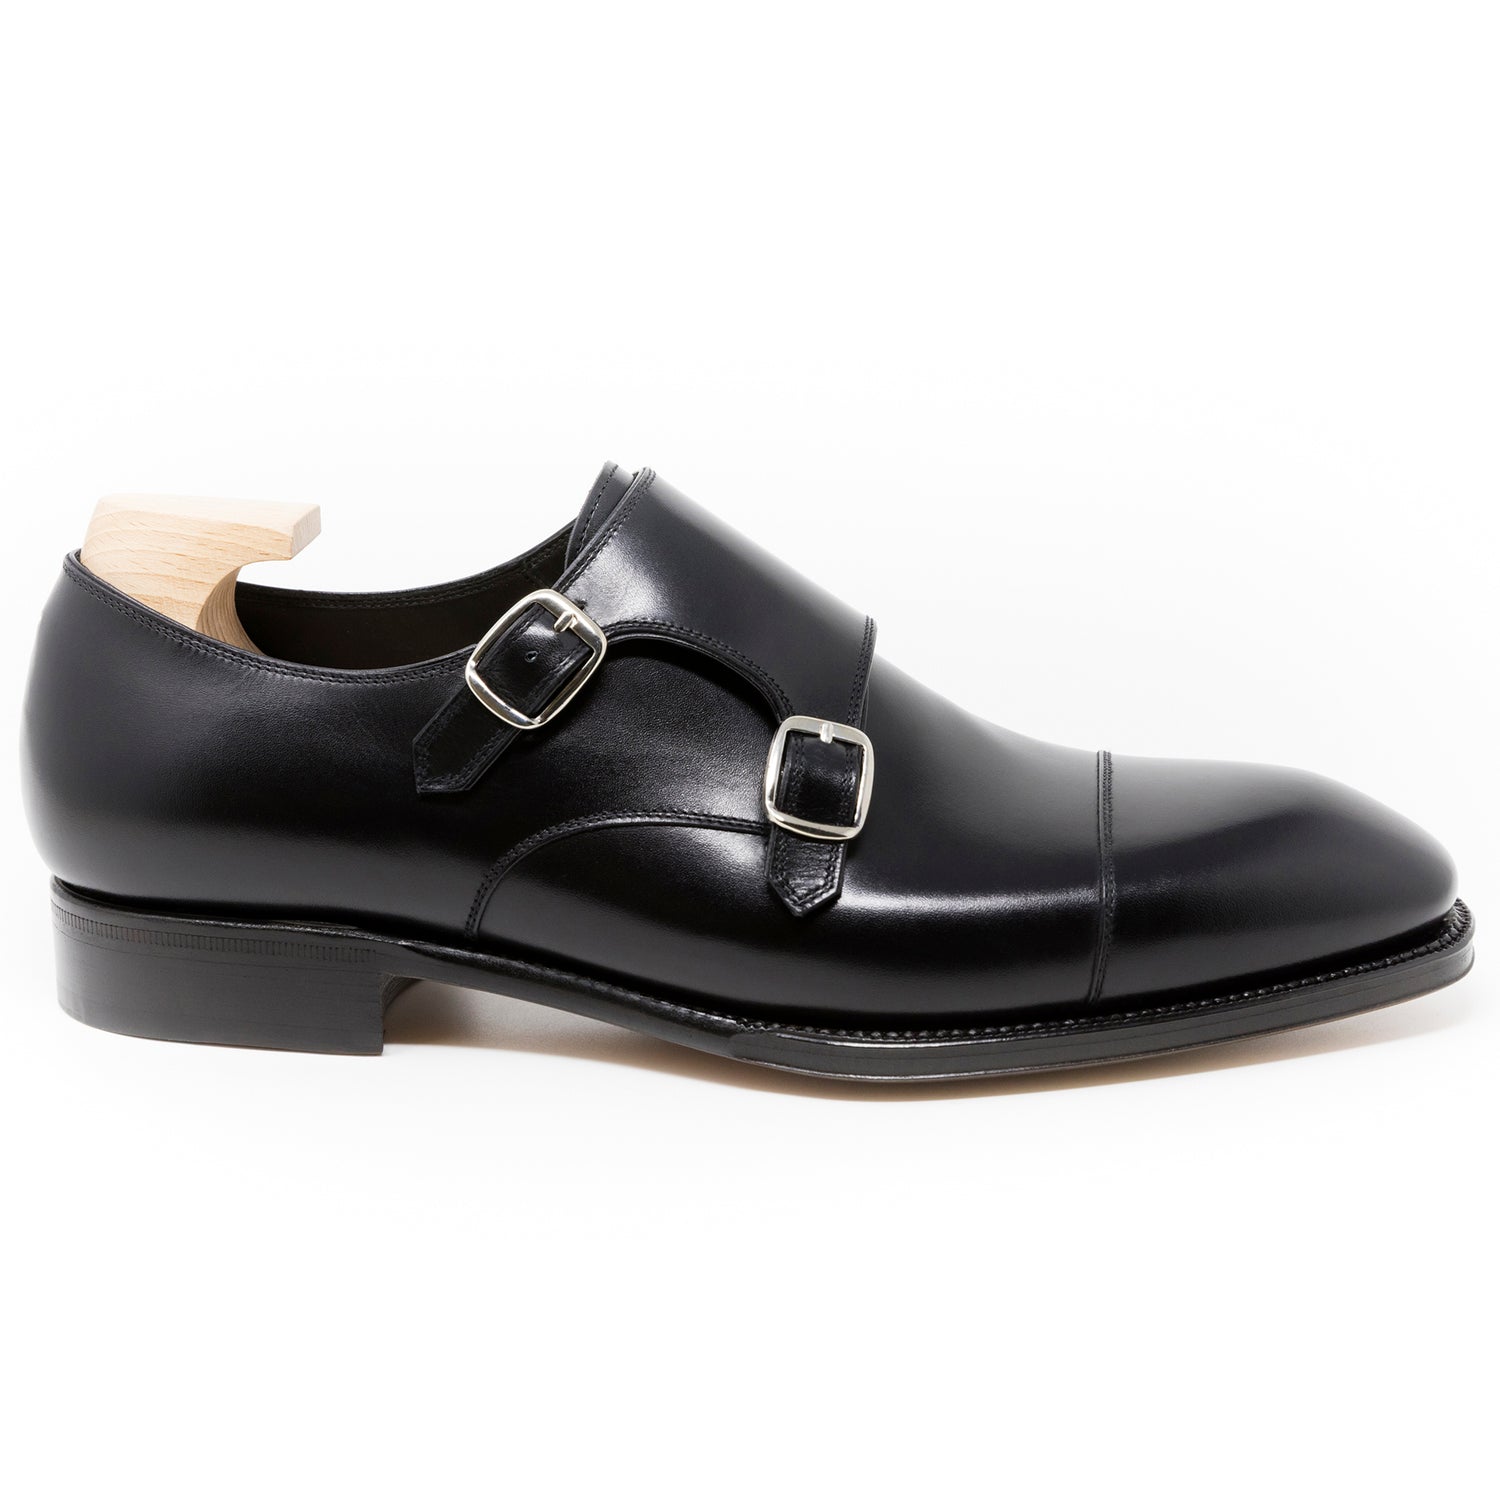 TLB Mallorca leather shoes 506 / ALAN / BOXCALF BLACK